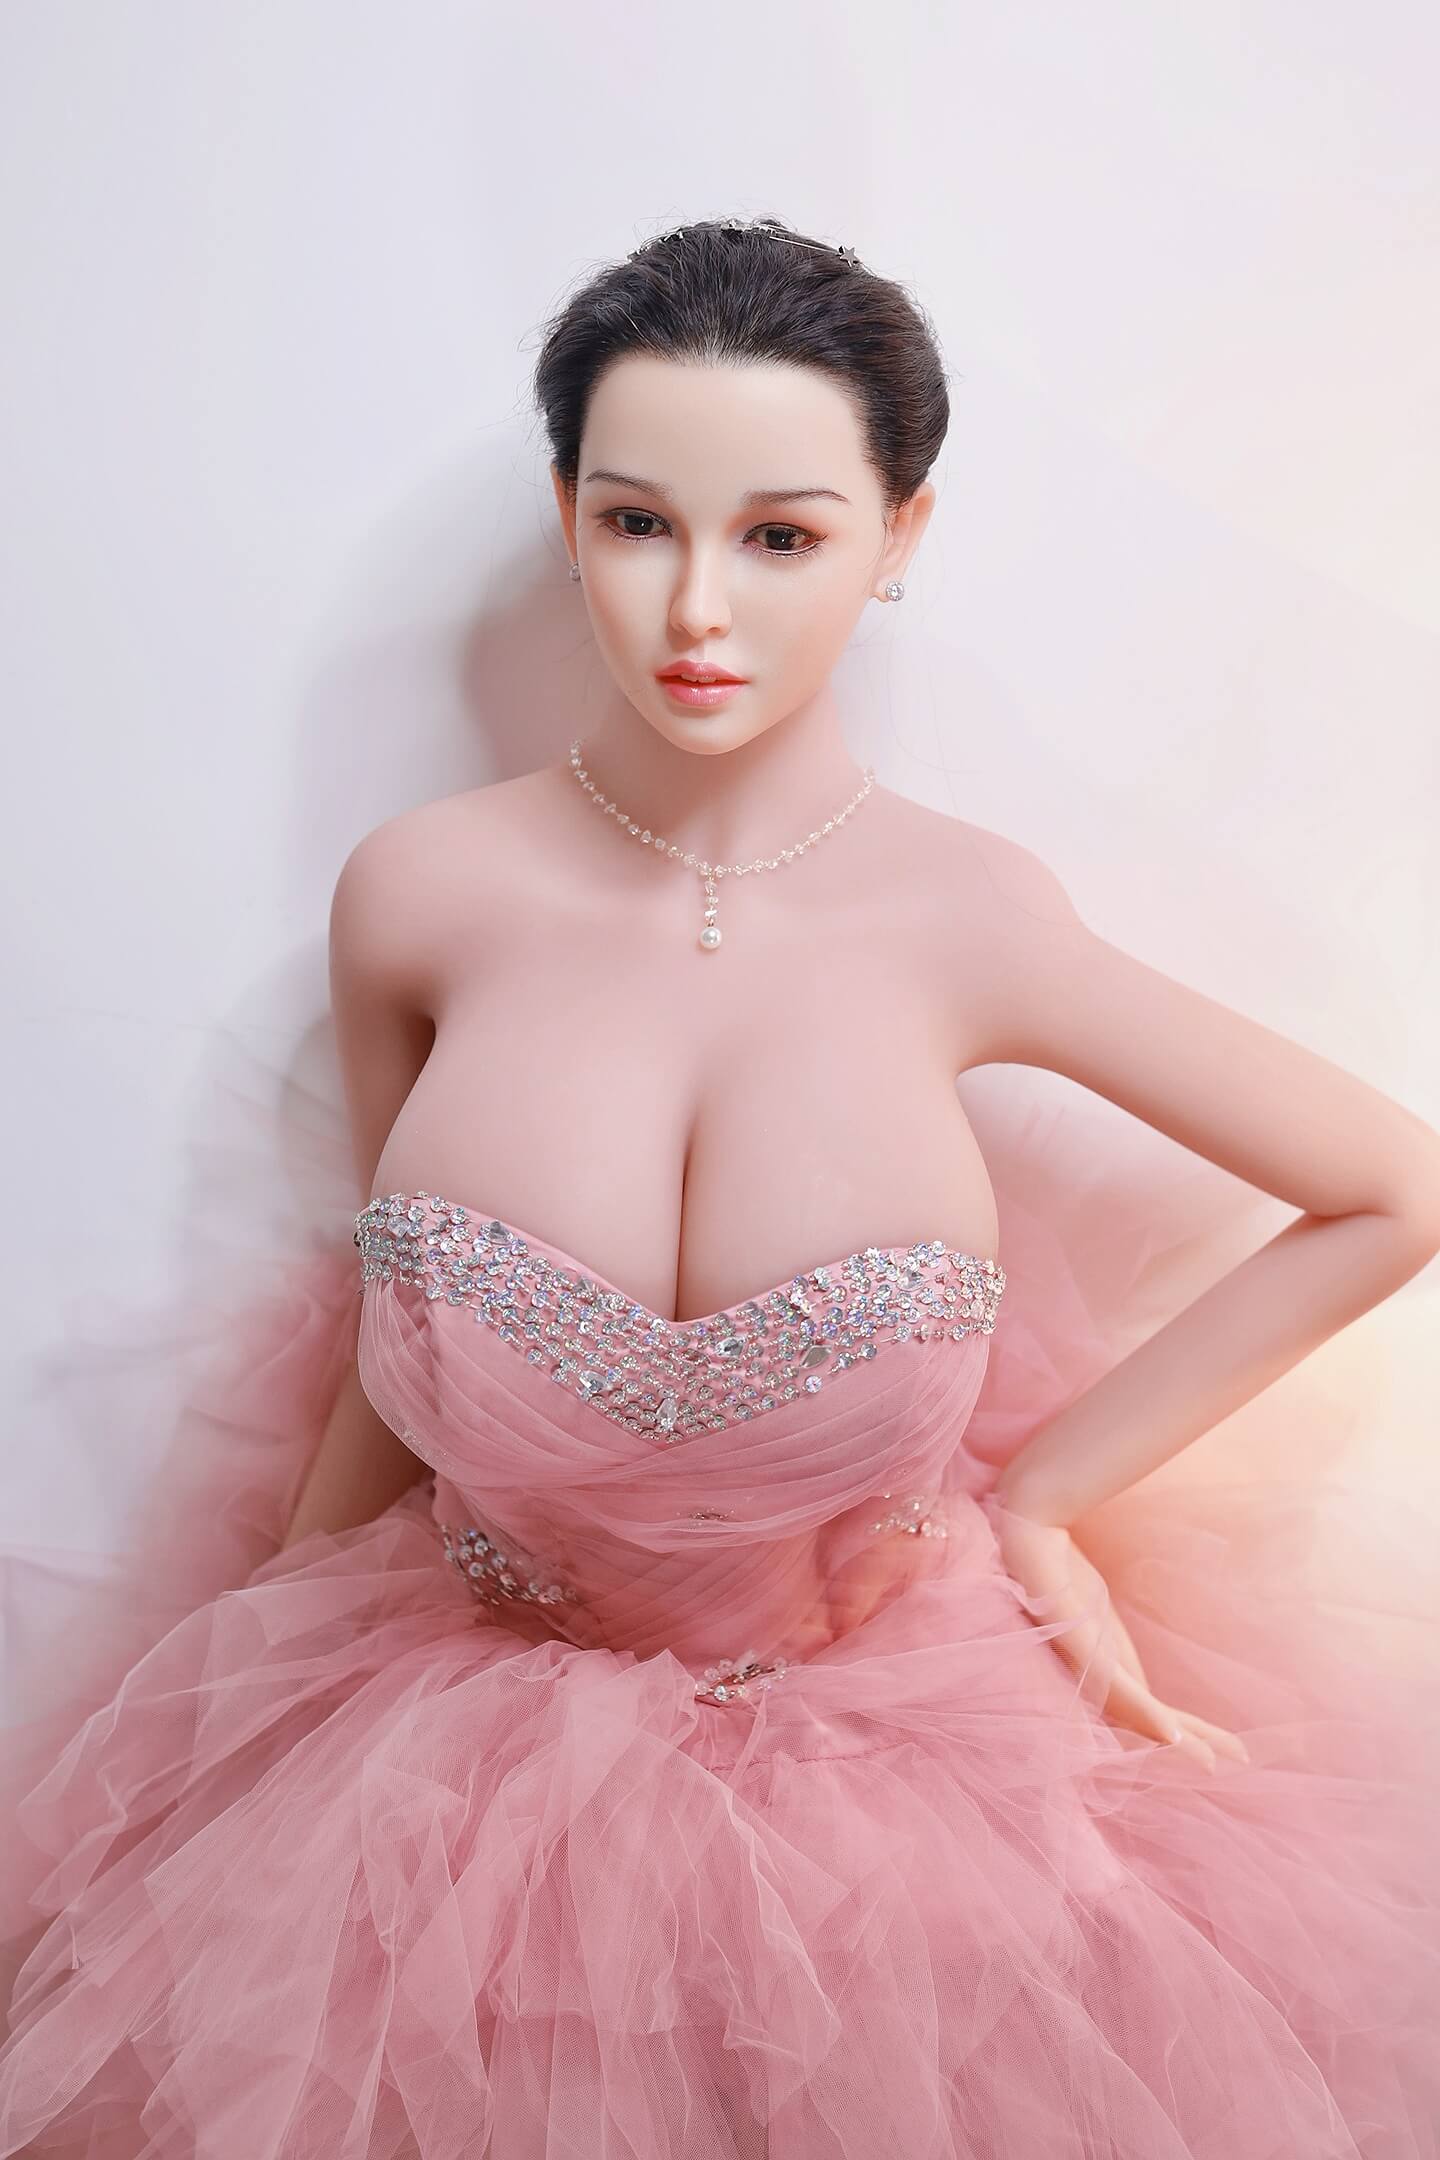 JY Doll - Real Love Doll - 5ft 7in (171cm) - Savannah - Love Dolls 4U